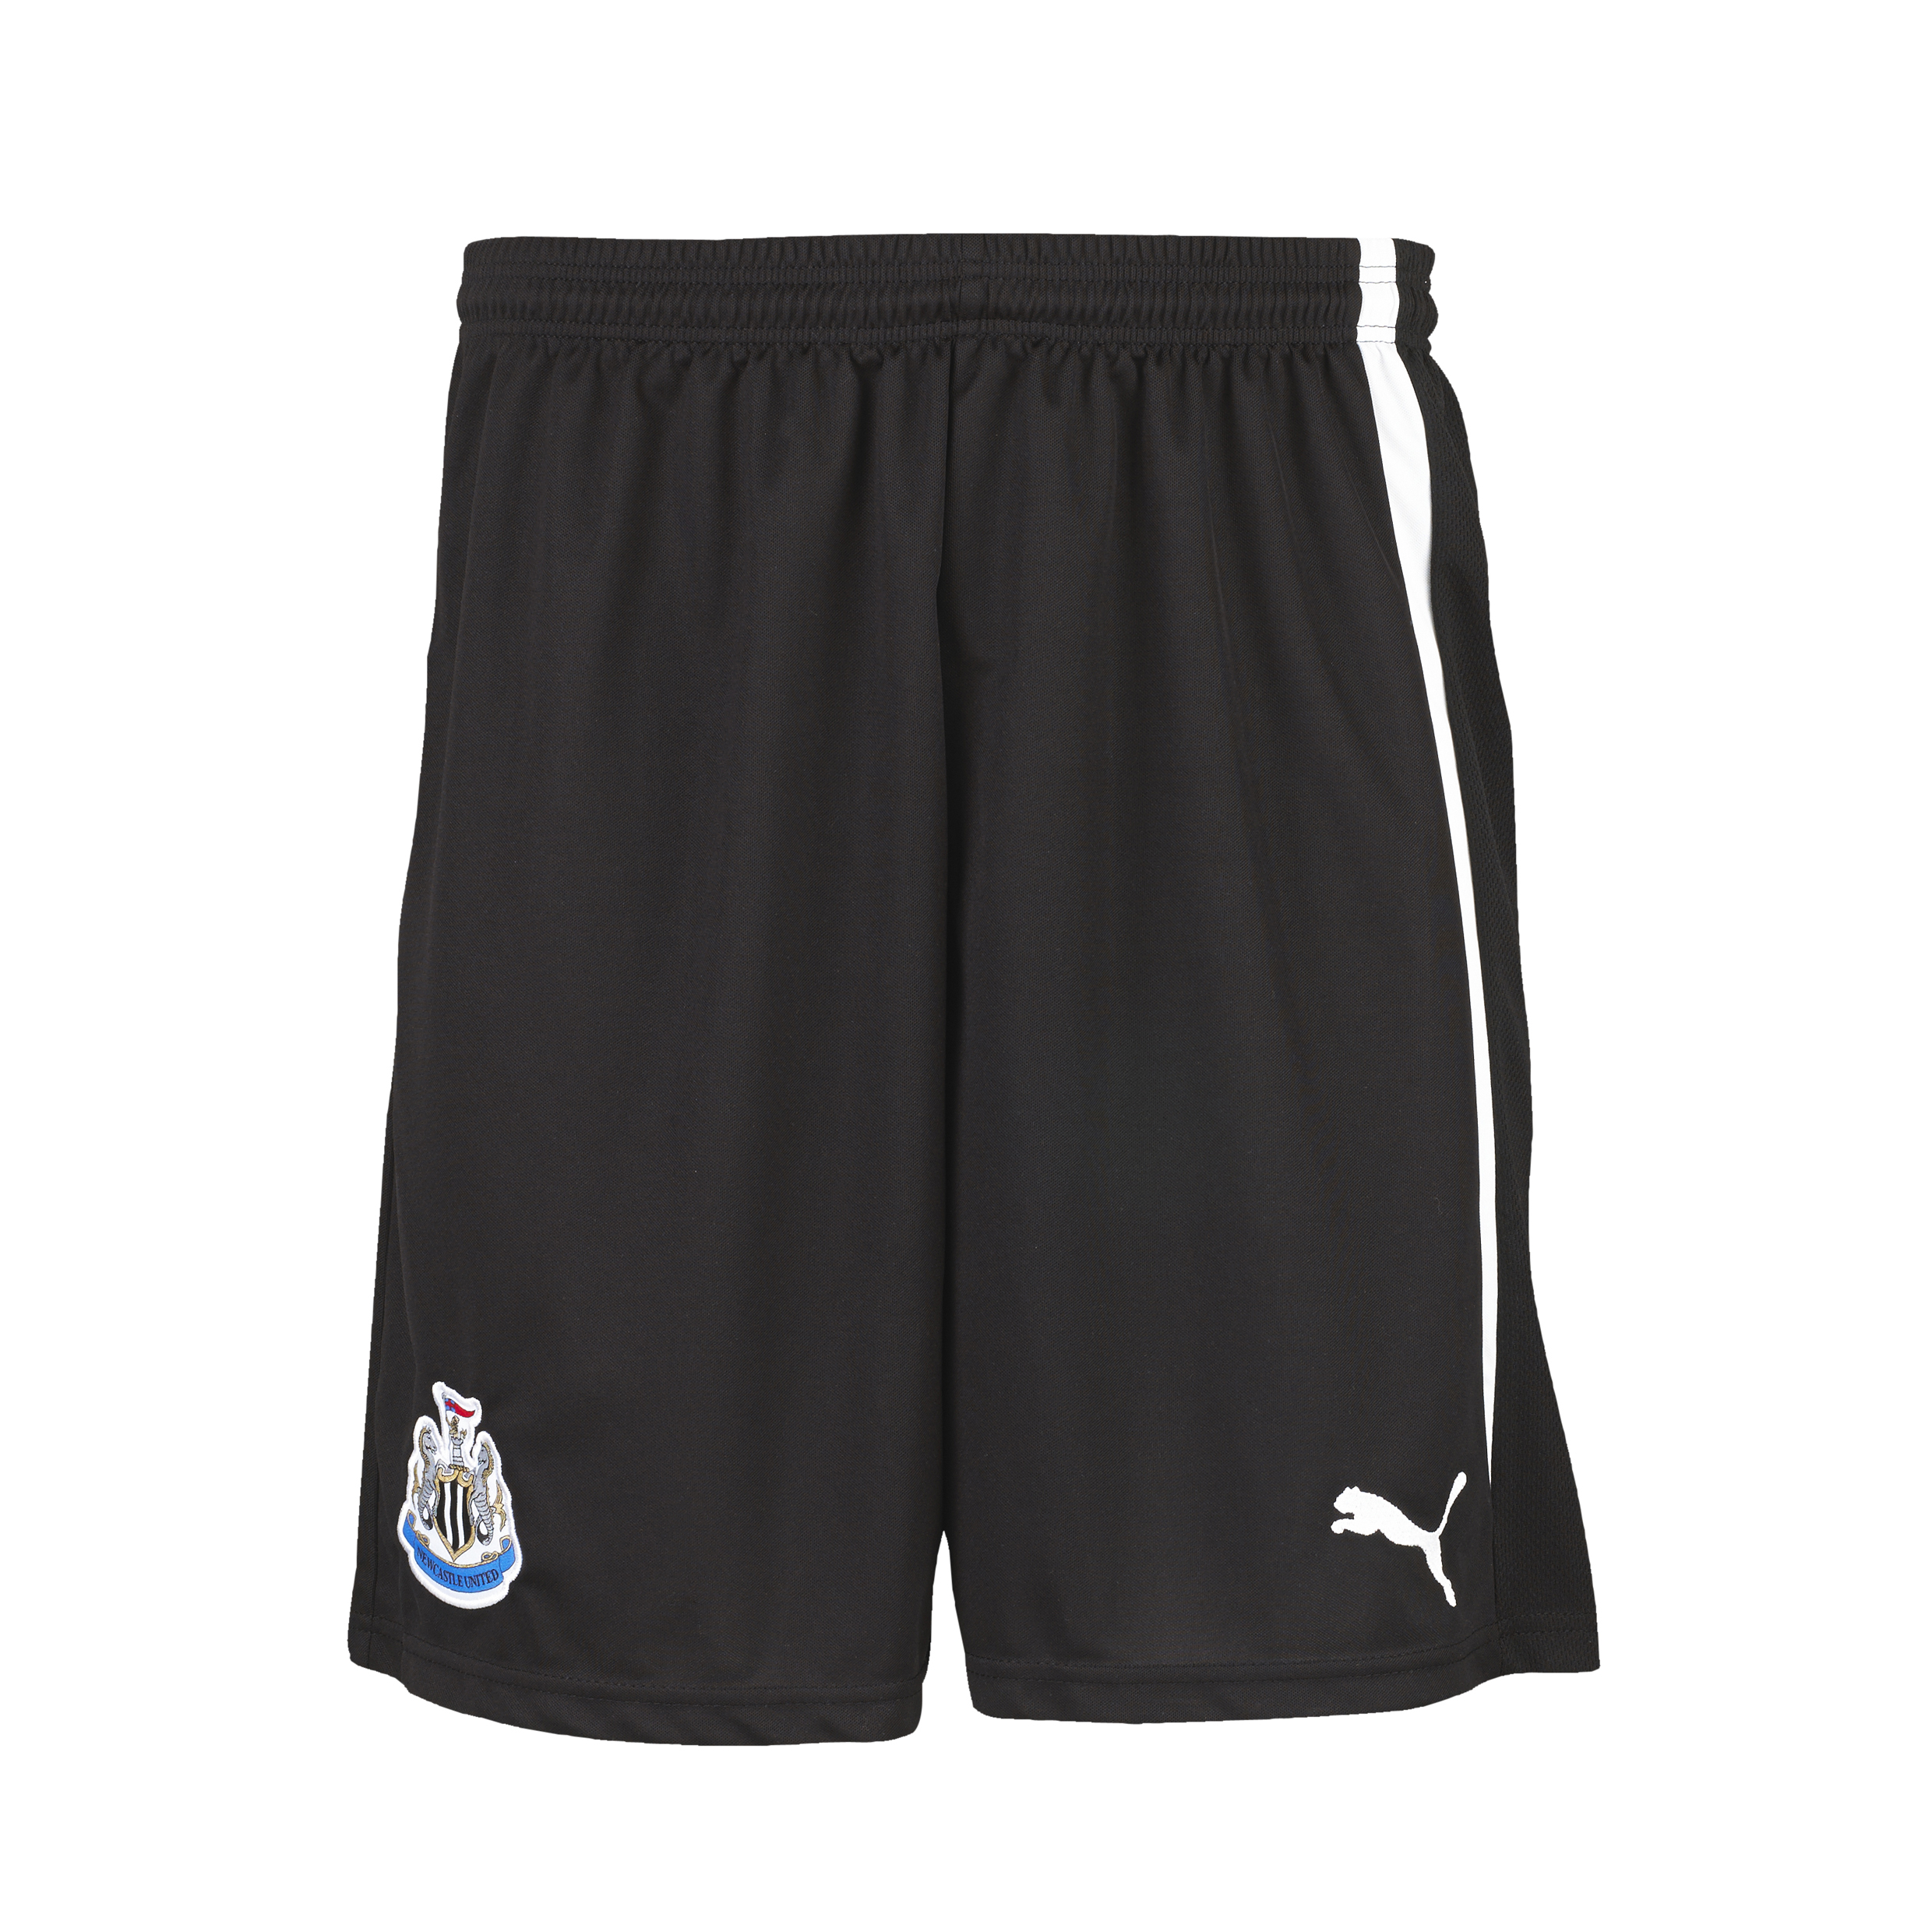 Newcastle United Home Shorts 2013/14